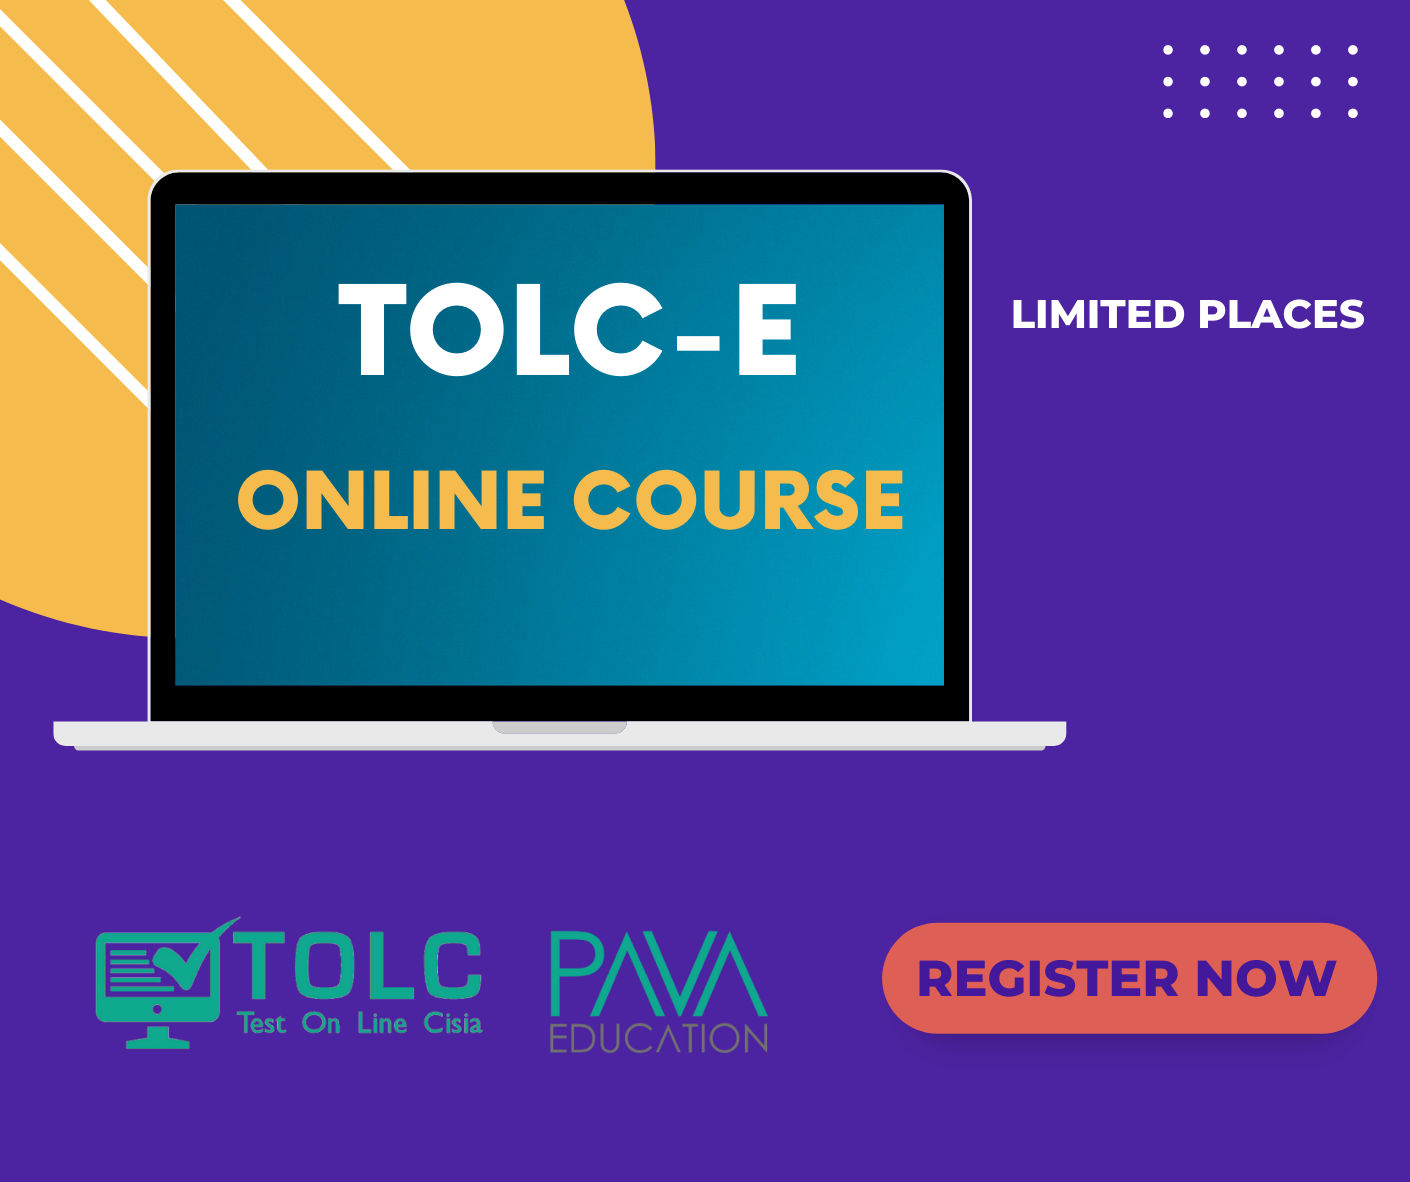 TOLC-E Course - Pava Education Courses